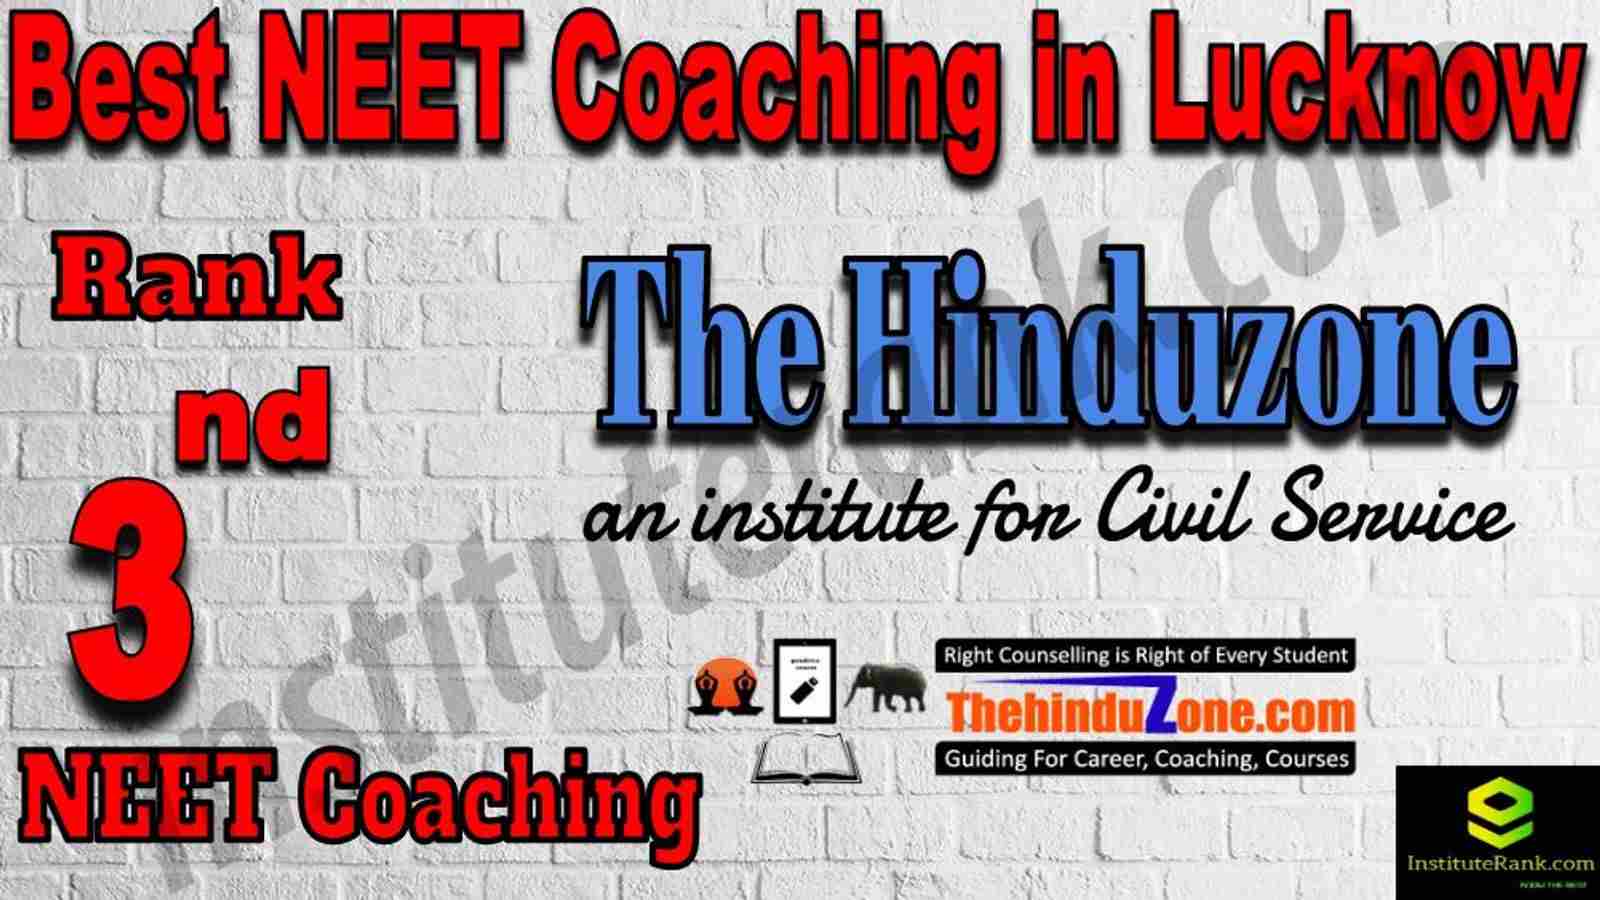 3rd Best Neet Coaching in Lucknow